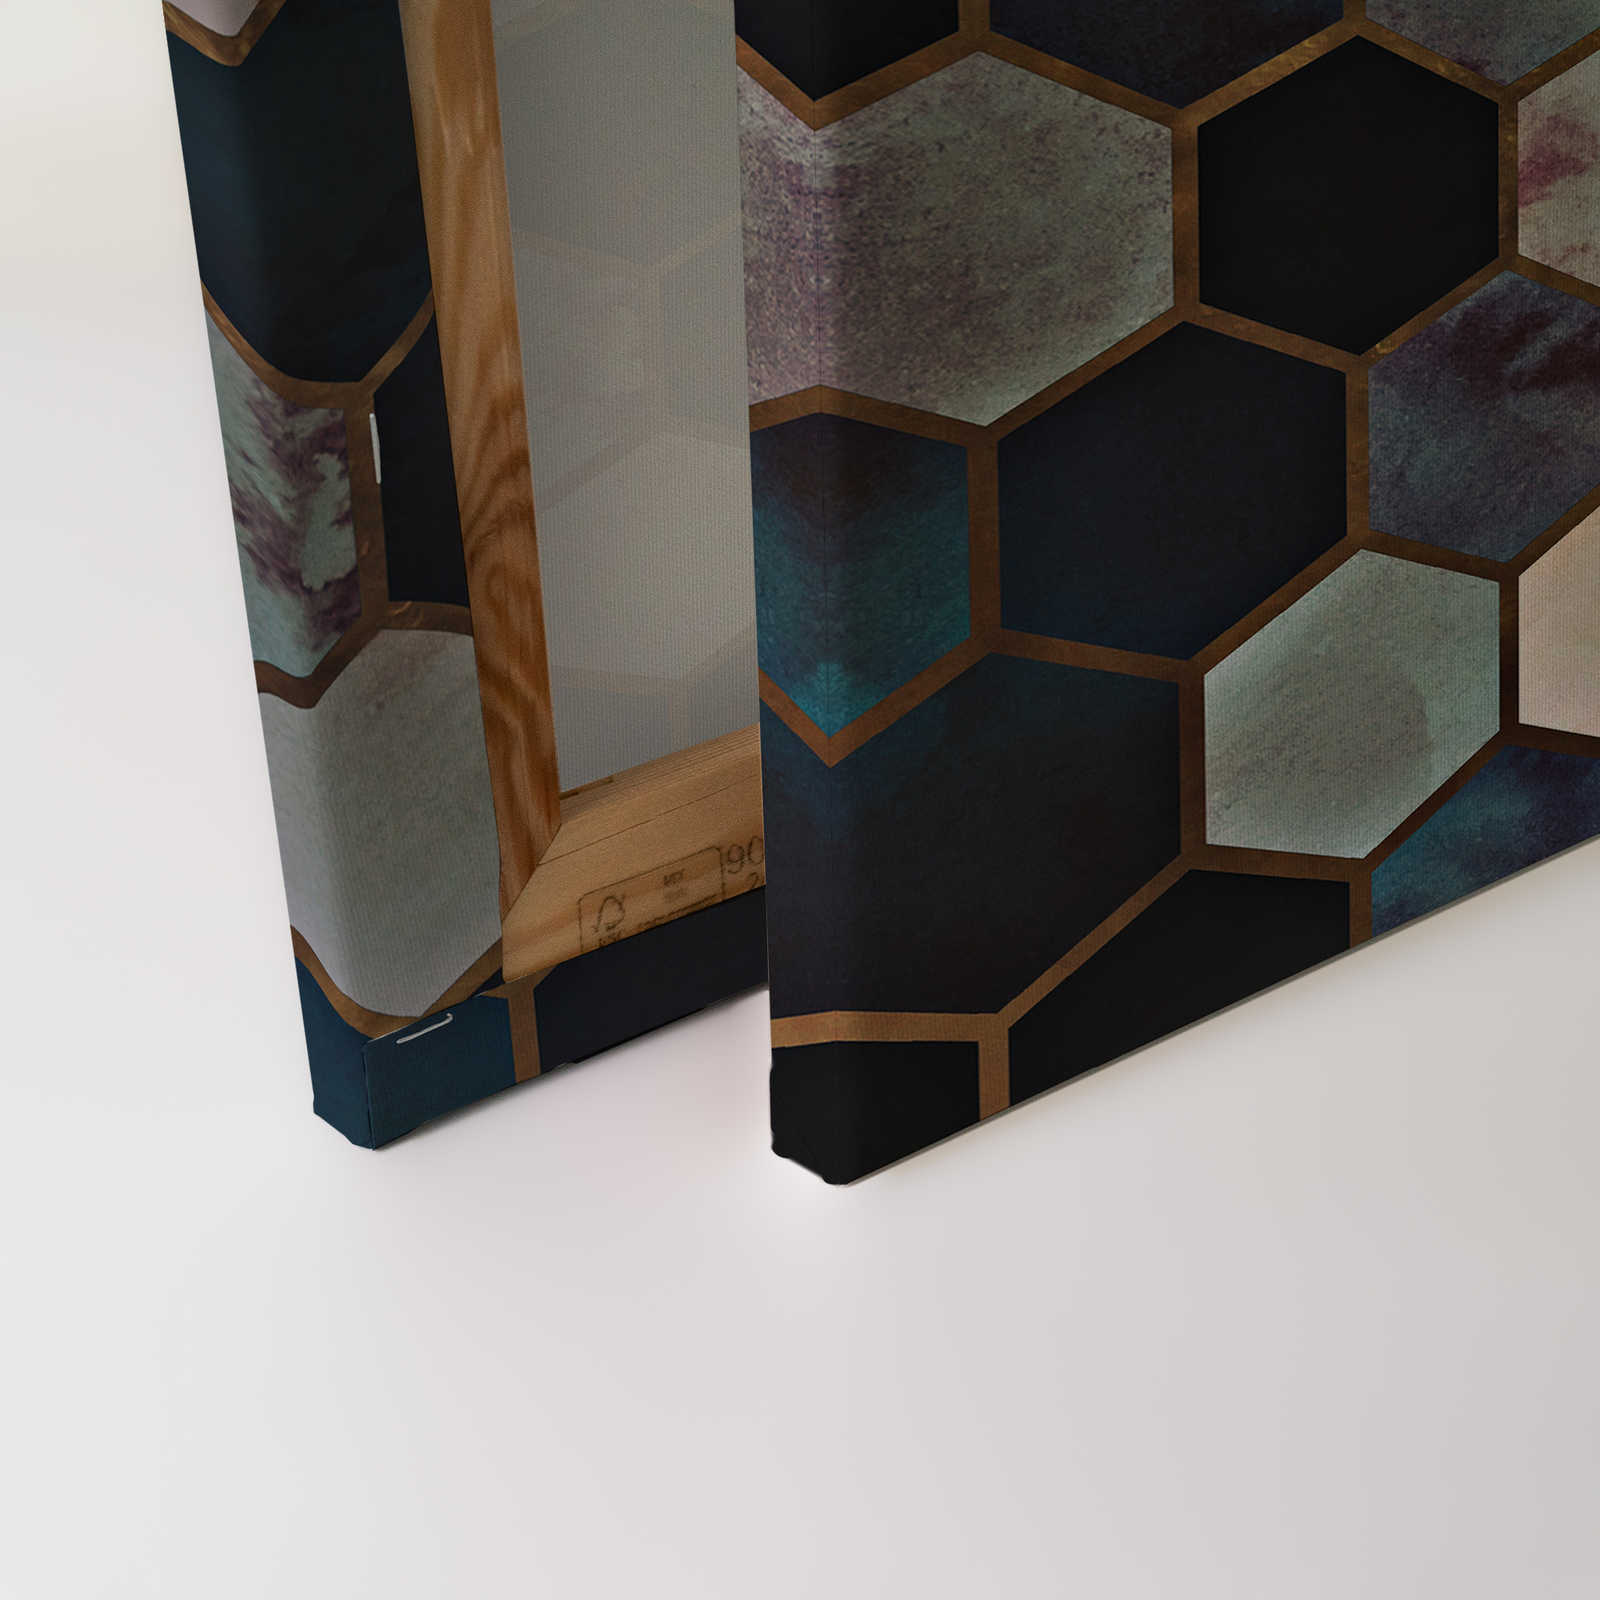             Aquarell Leinwandbild Marmor Design mit Gold Muster – 1,20 m x 0,80 m
        